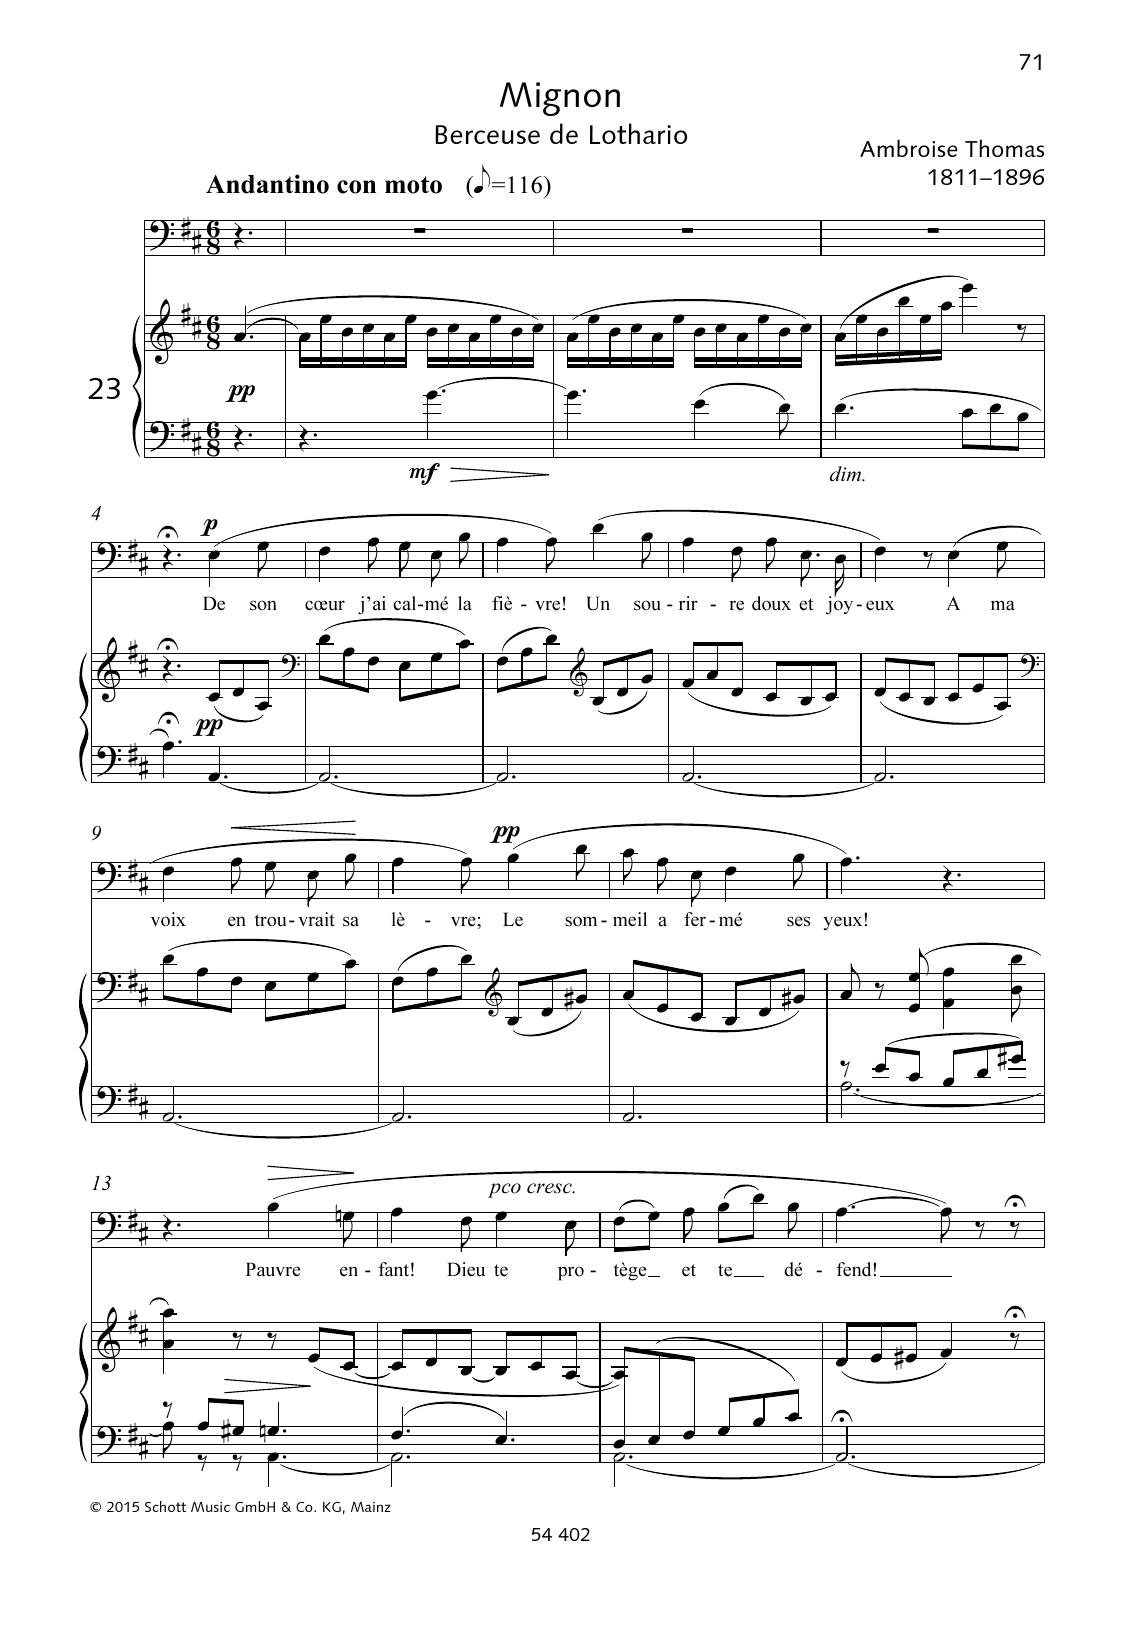 Download Ambroise Thomas De son coeur j'ai calmé la fièvre! Sheet Music and learn how to play Piano & Vocal PDF digital score in minutes